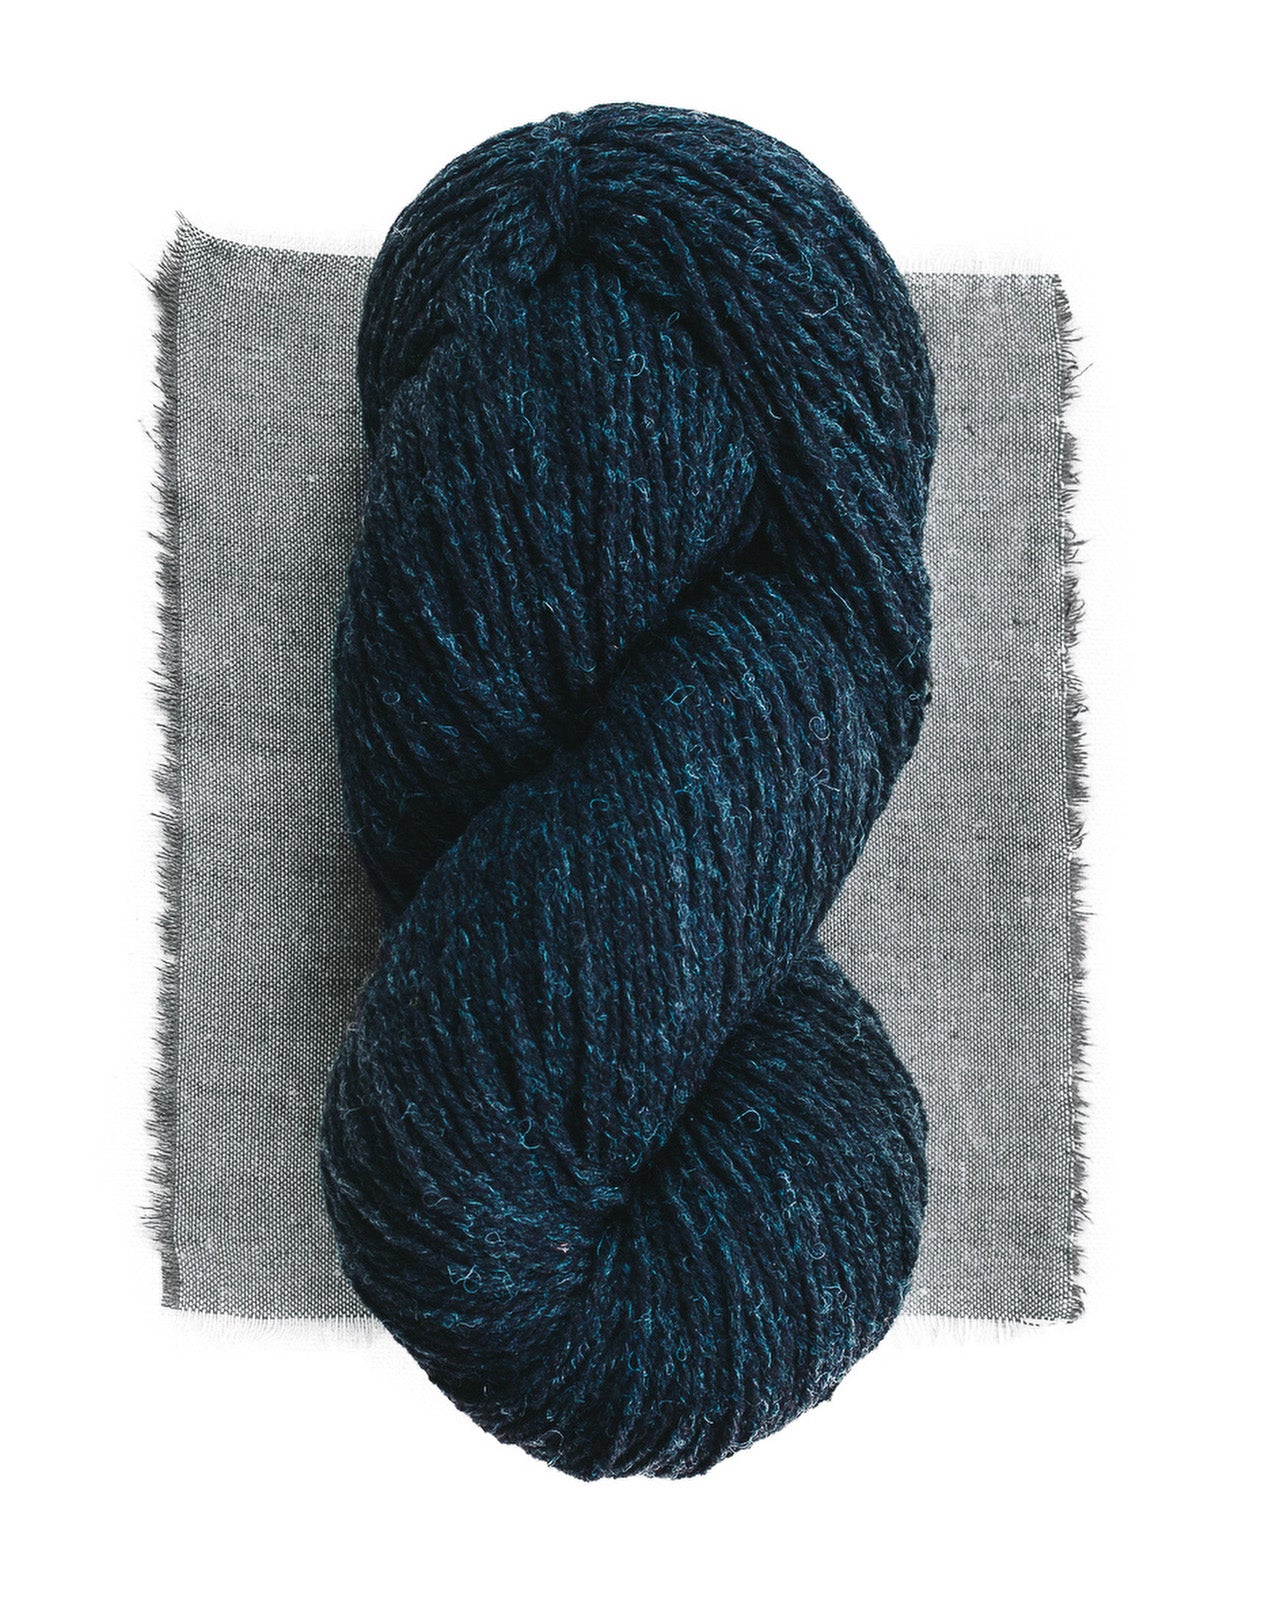 Harrisville Designs Nightshades Knitting Yarn